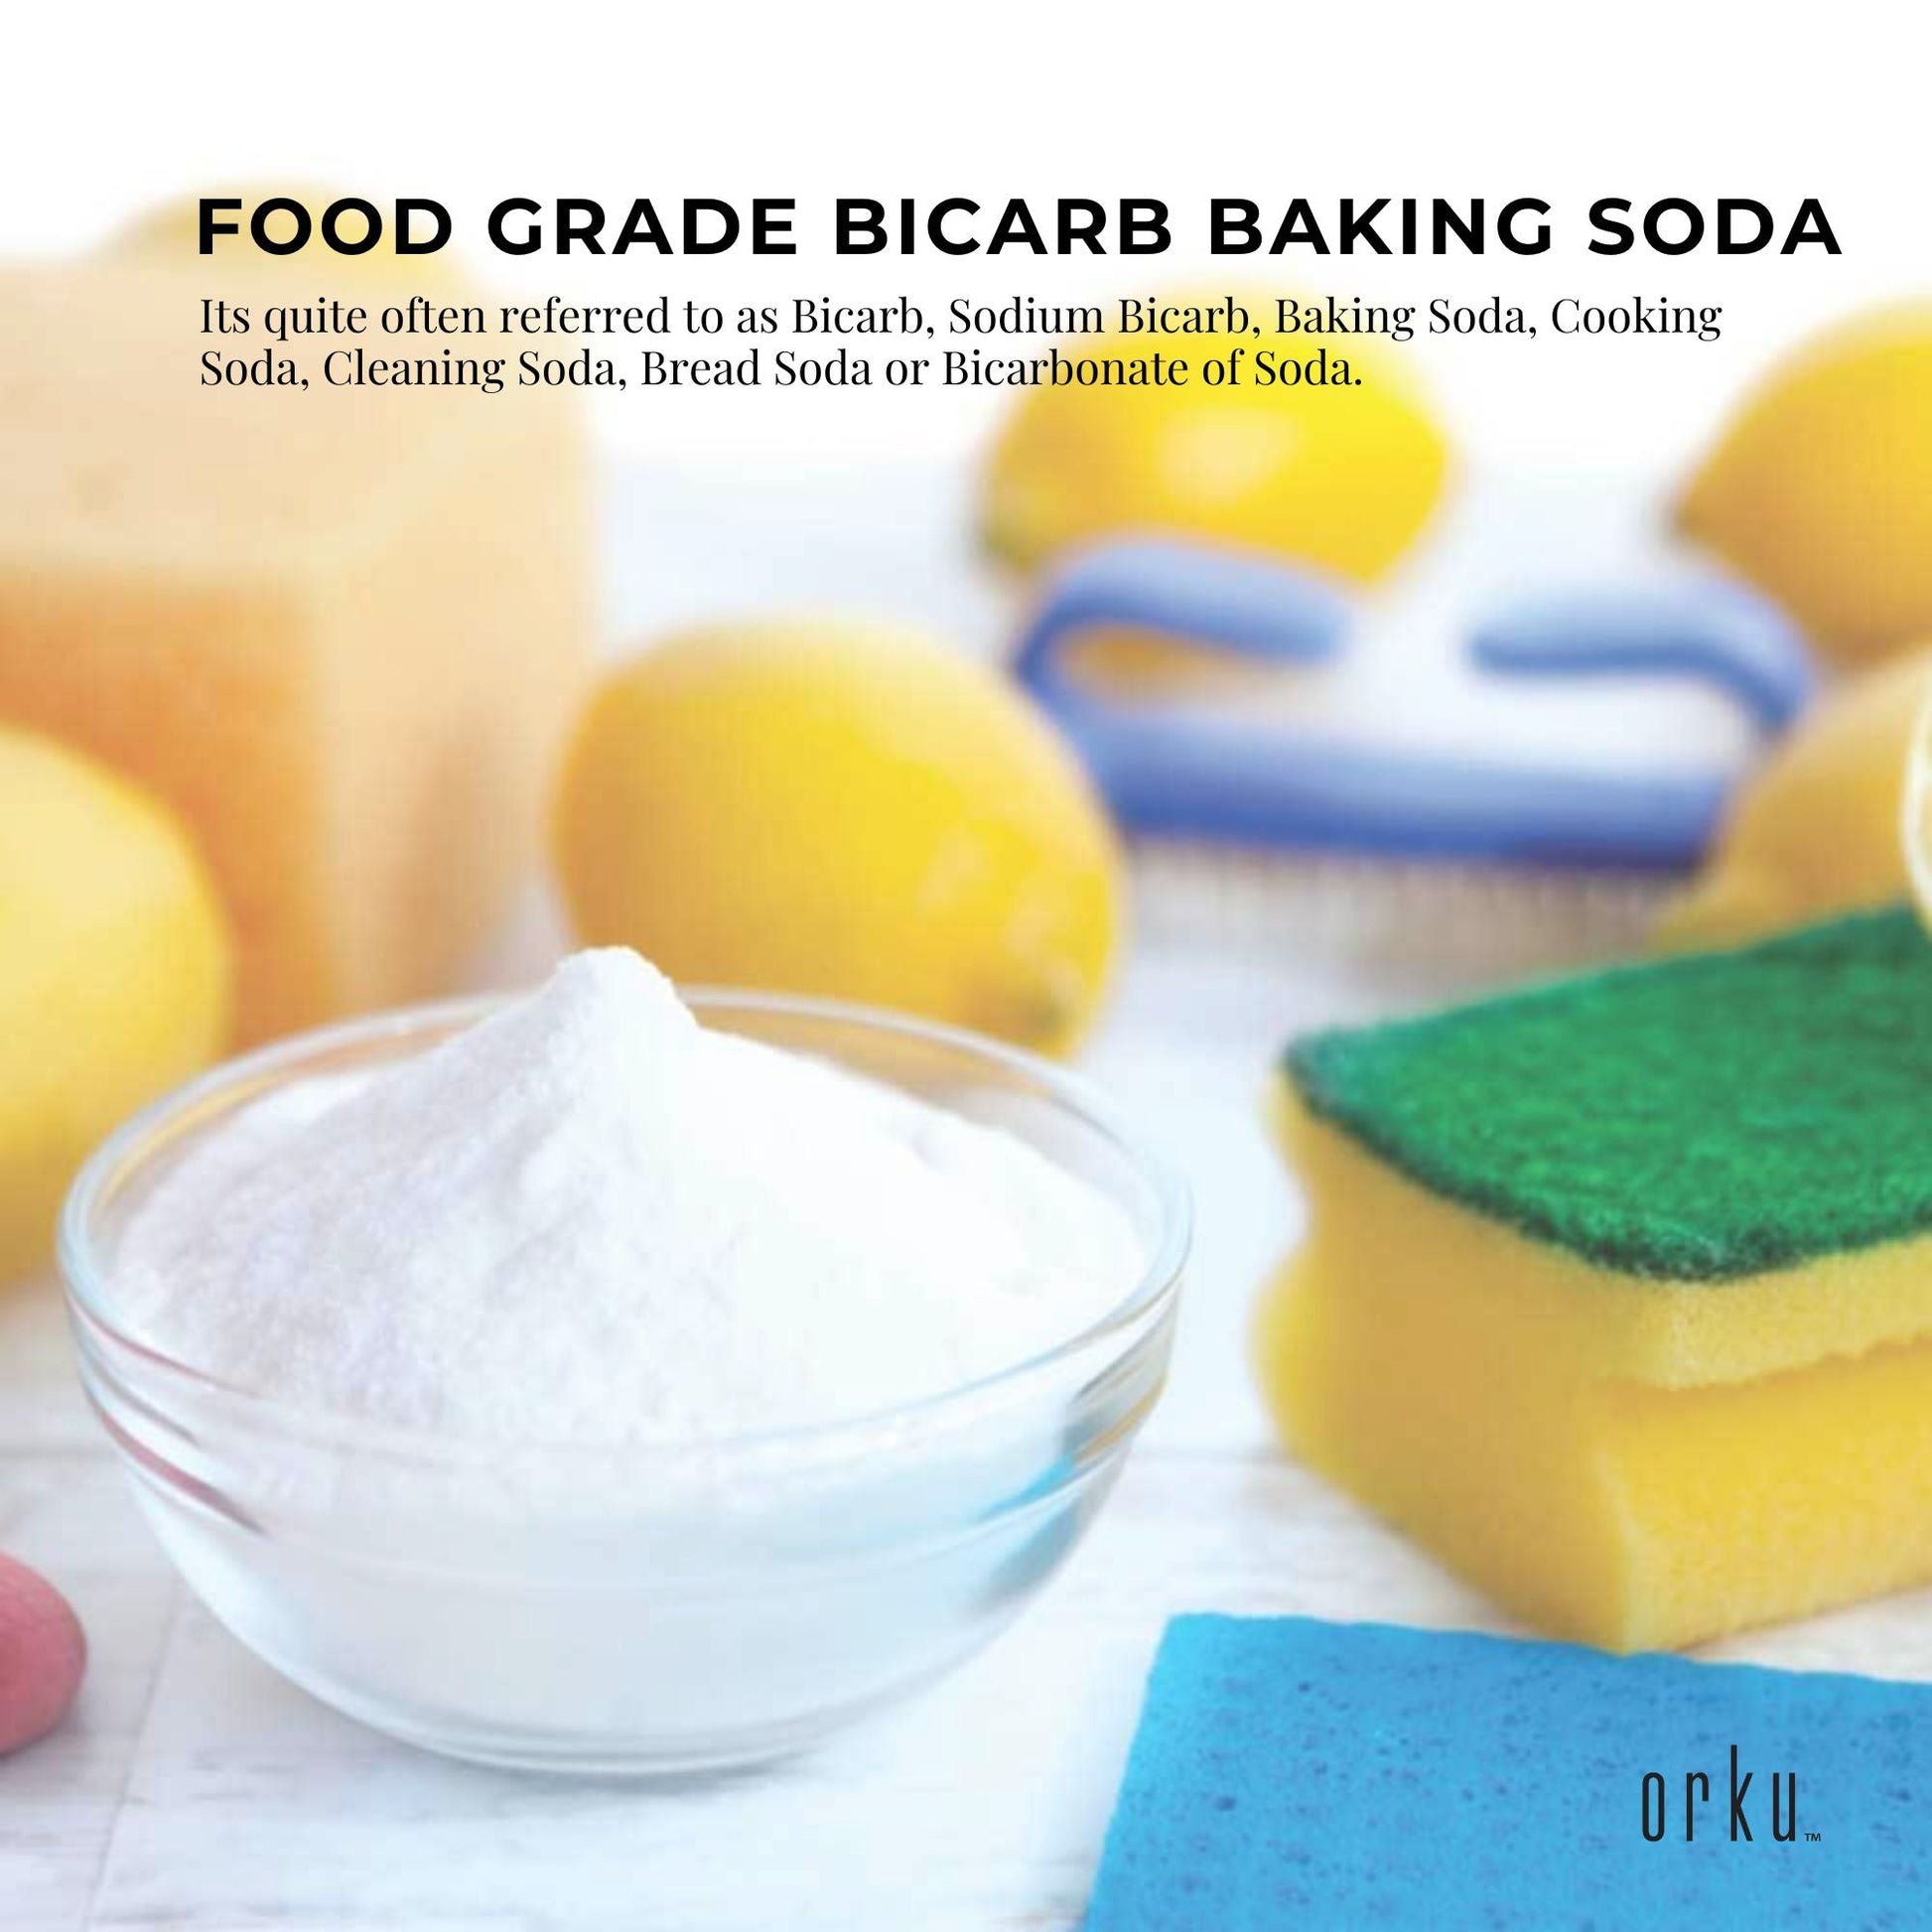 2Kg Sodium Bicarbonate - Food Grade Bicarb Baking Soda Hydrogen Carbonate Powder